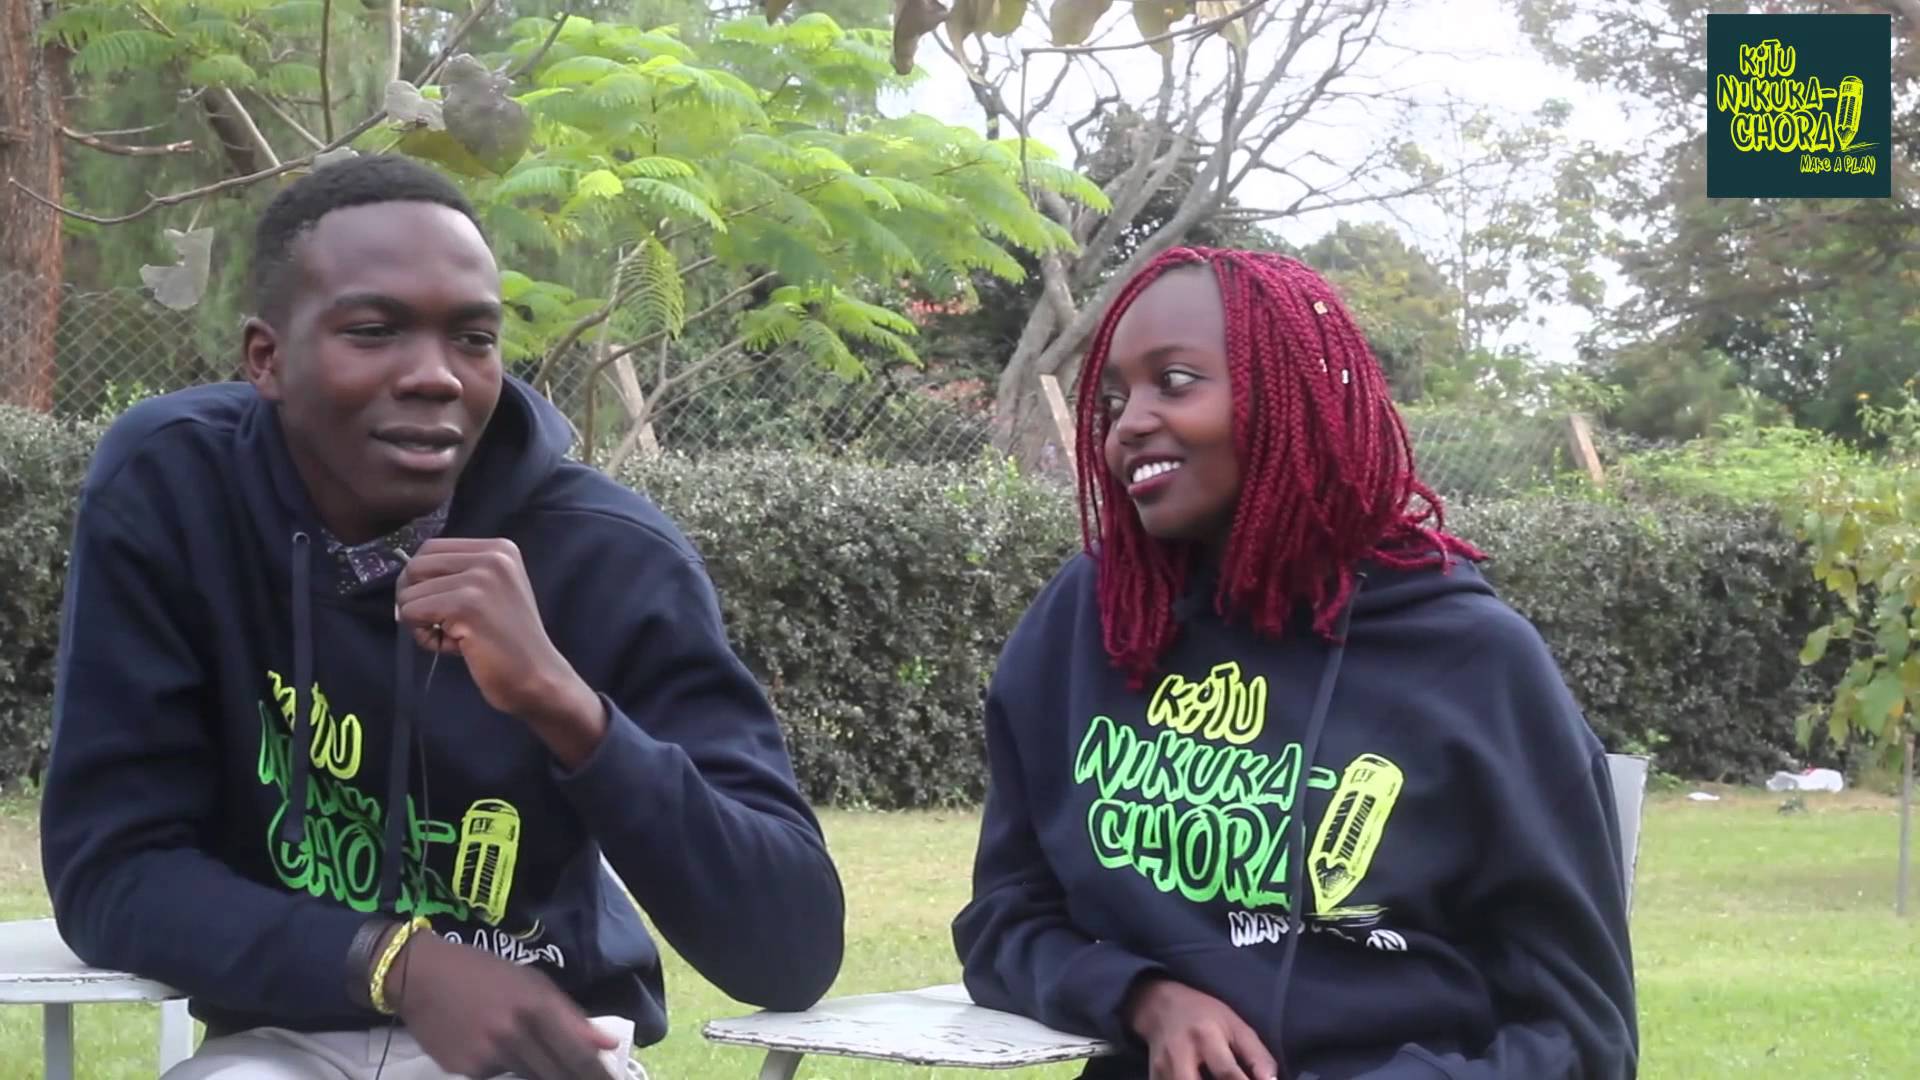 trust condoms - What Kenyatta University Students Plan On Friday Nights